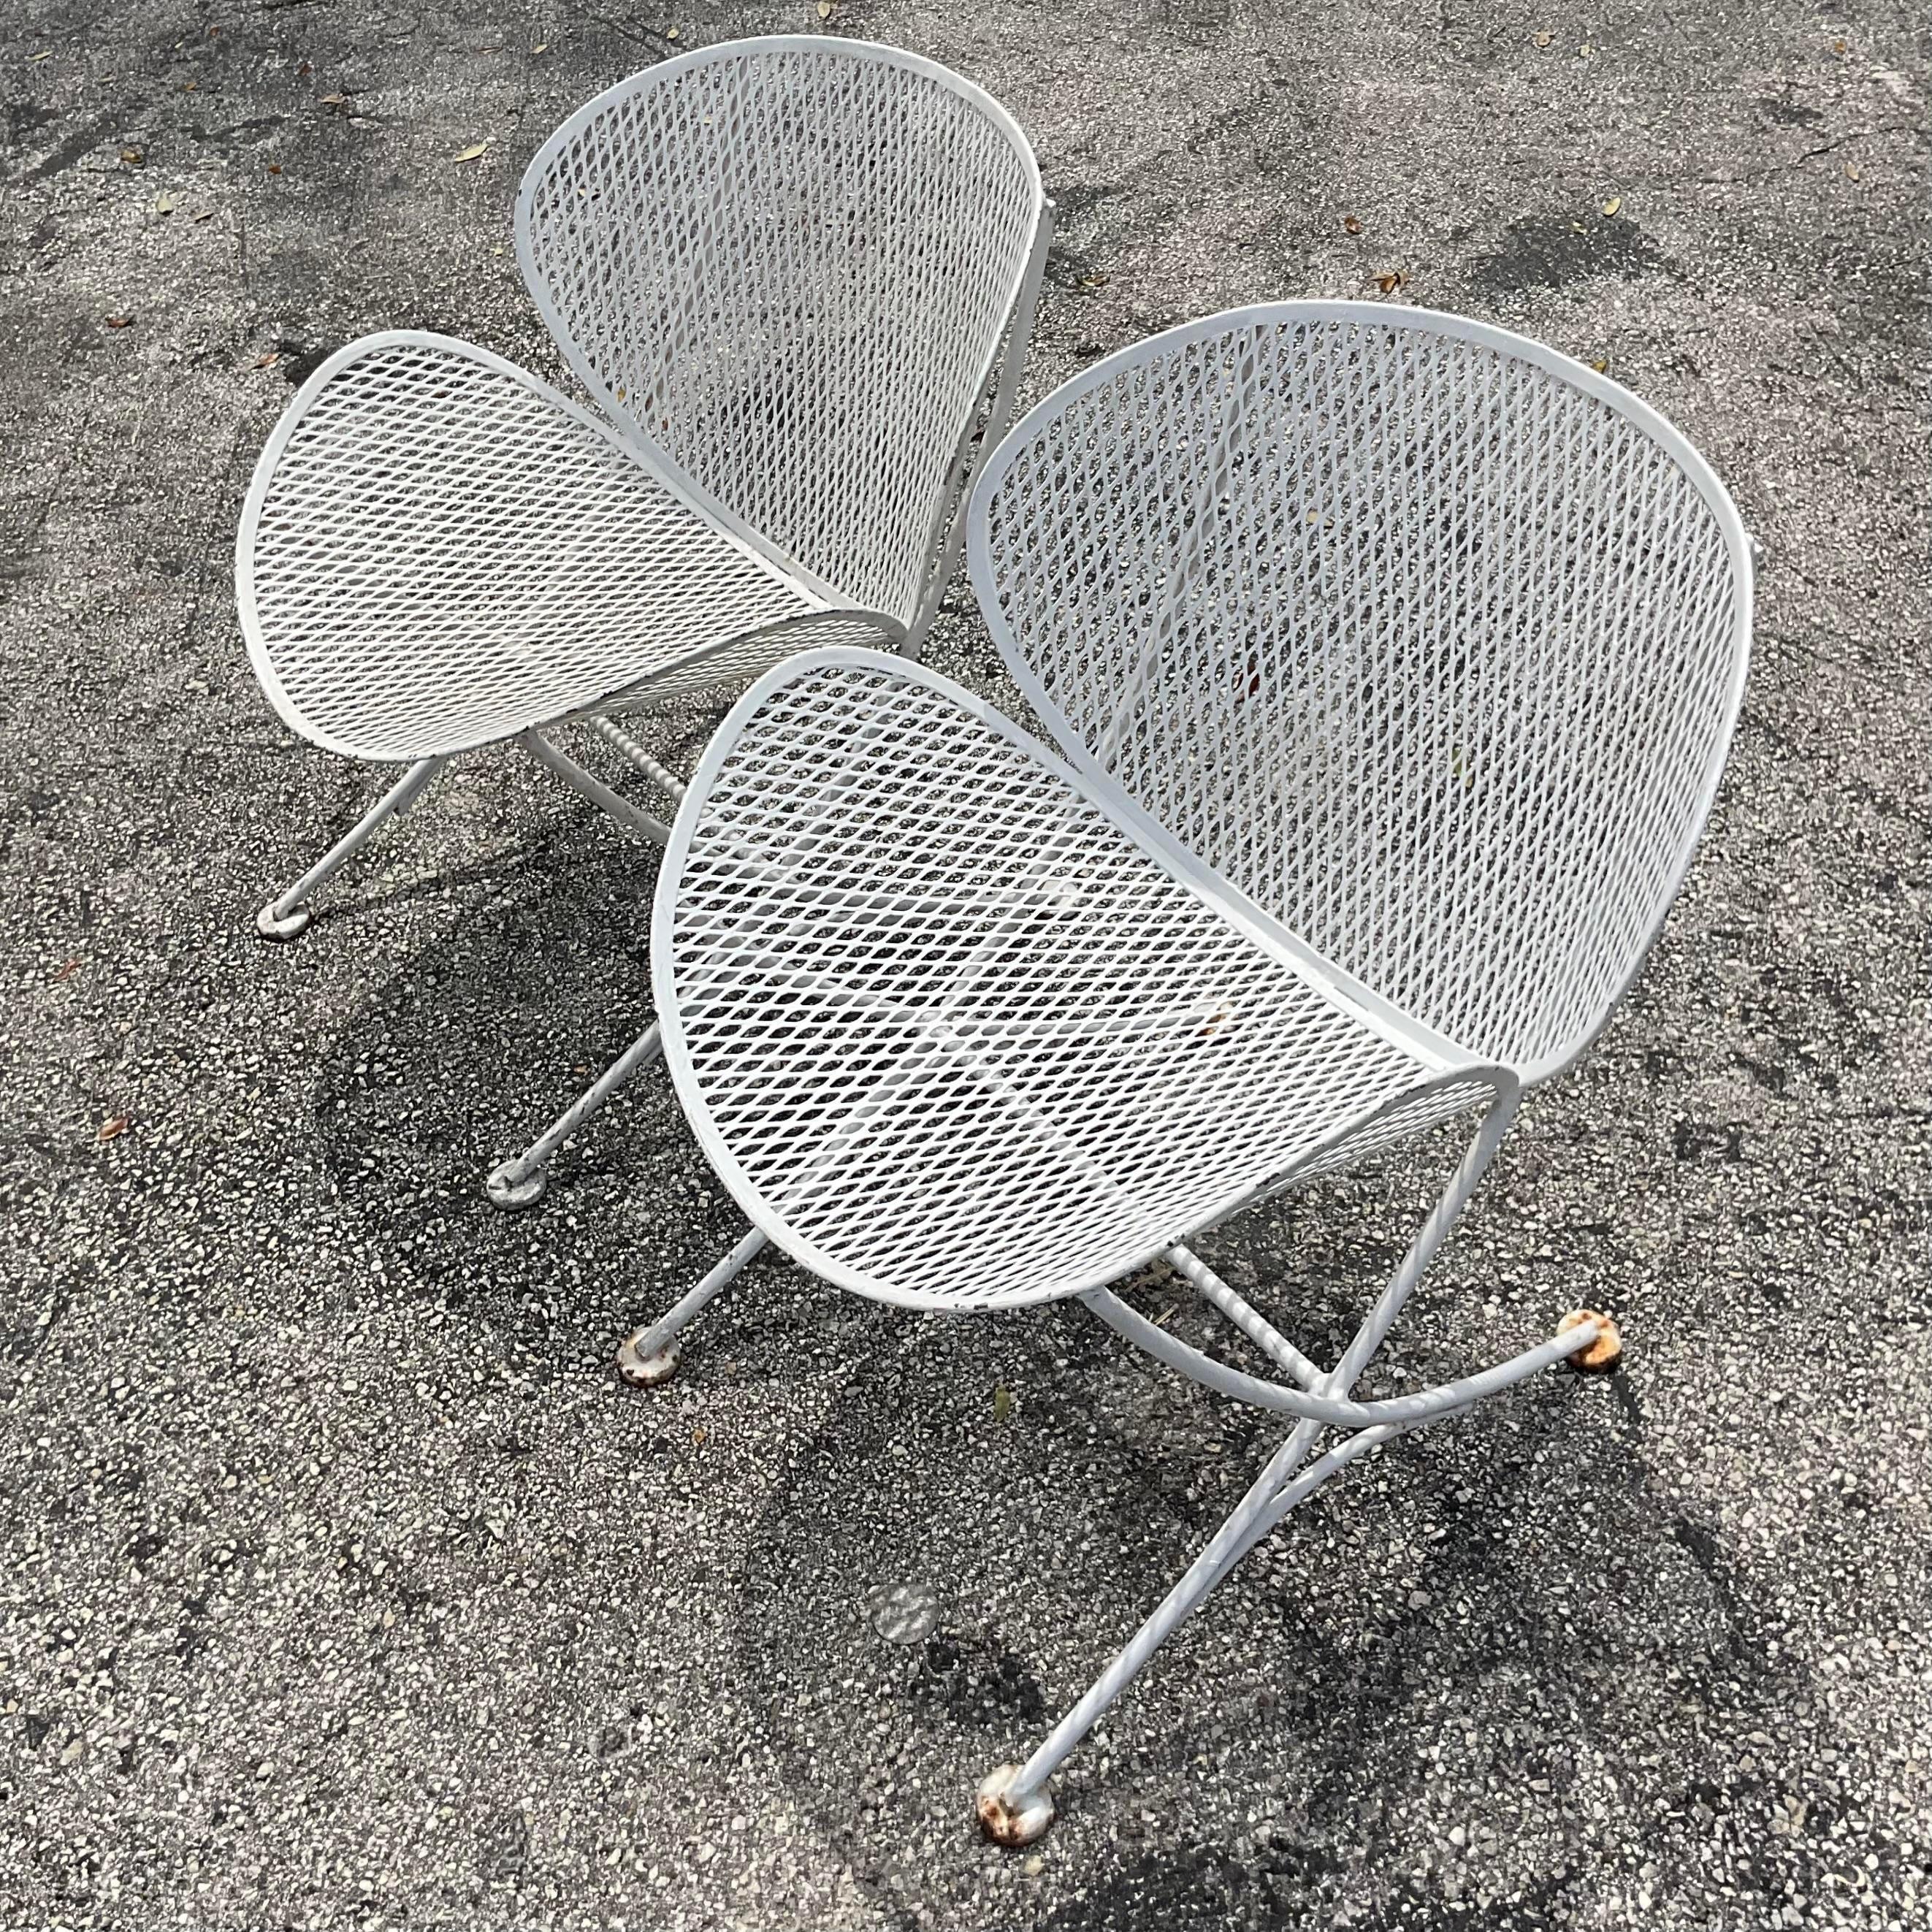 20th Century Vintage Mid-Century Modern Salterini Wrought Iron “Orange Slice” Chairs - a Pair